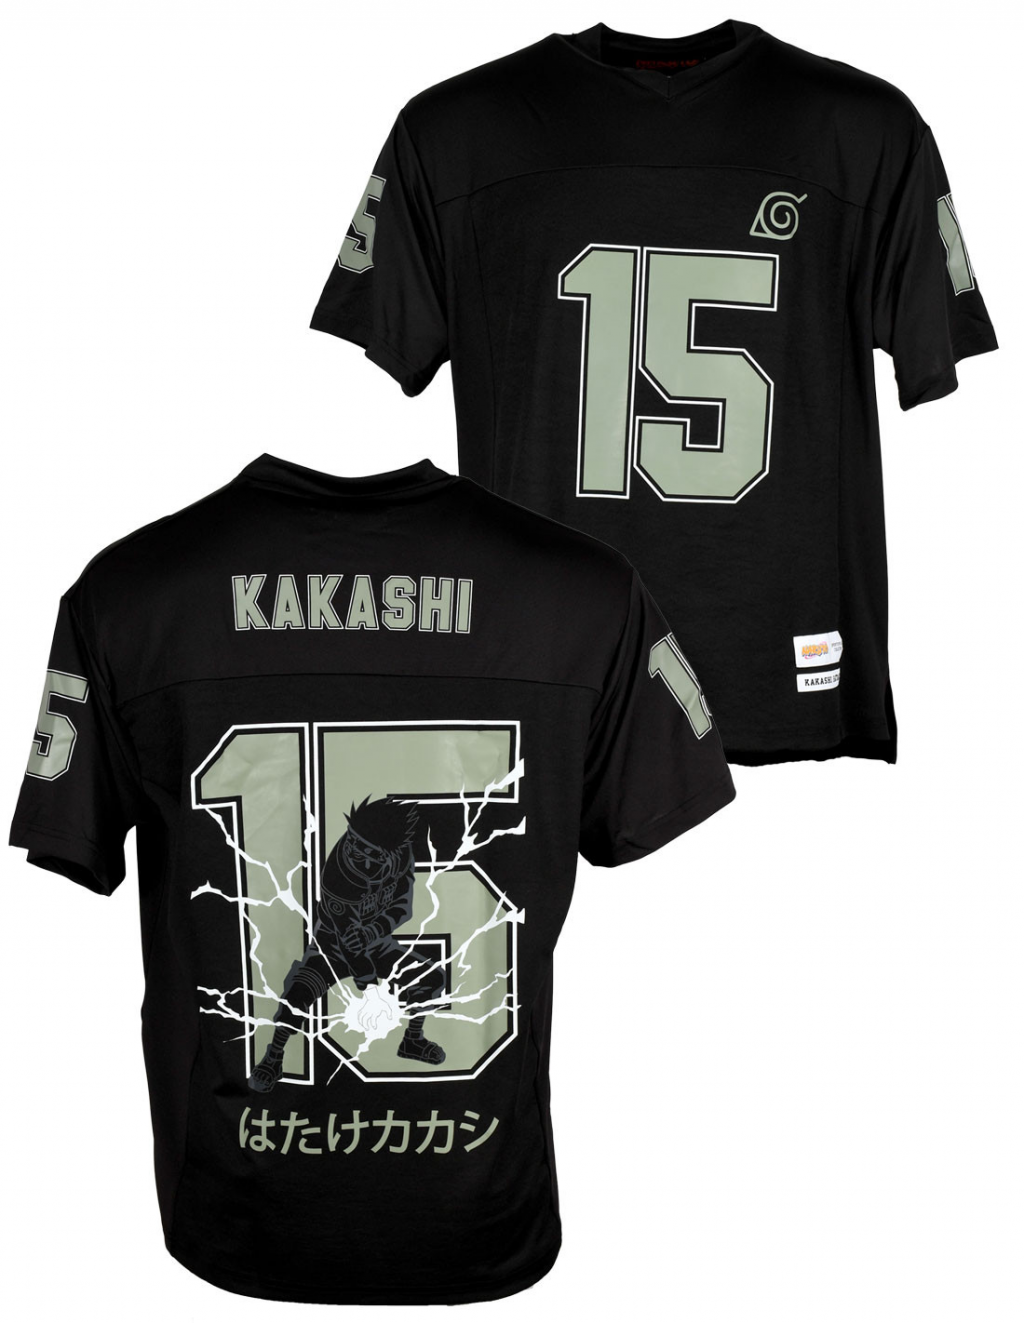 NARUTO - Kakashi - T-Shirt Sports US Replica unisex (XXL)